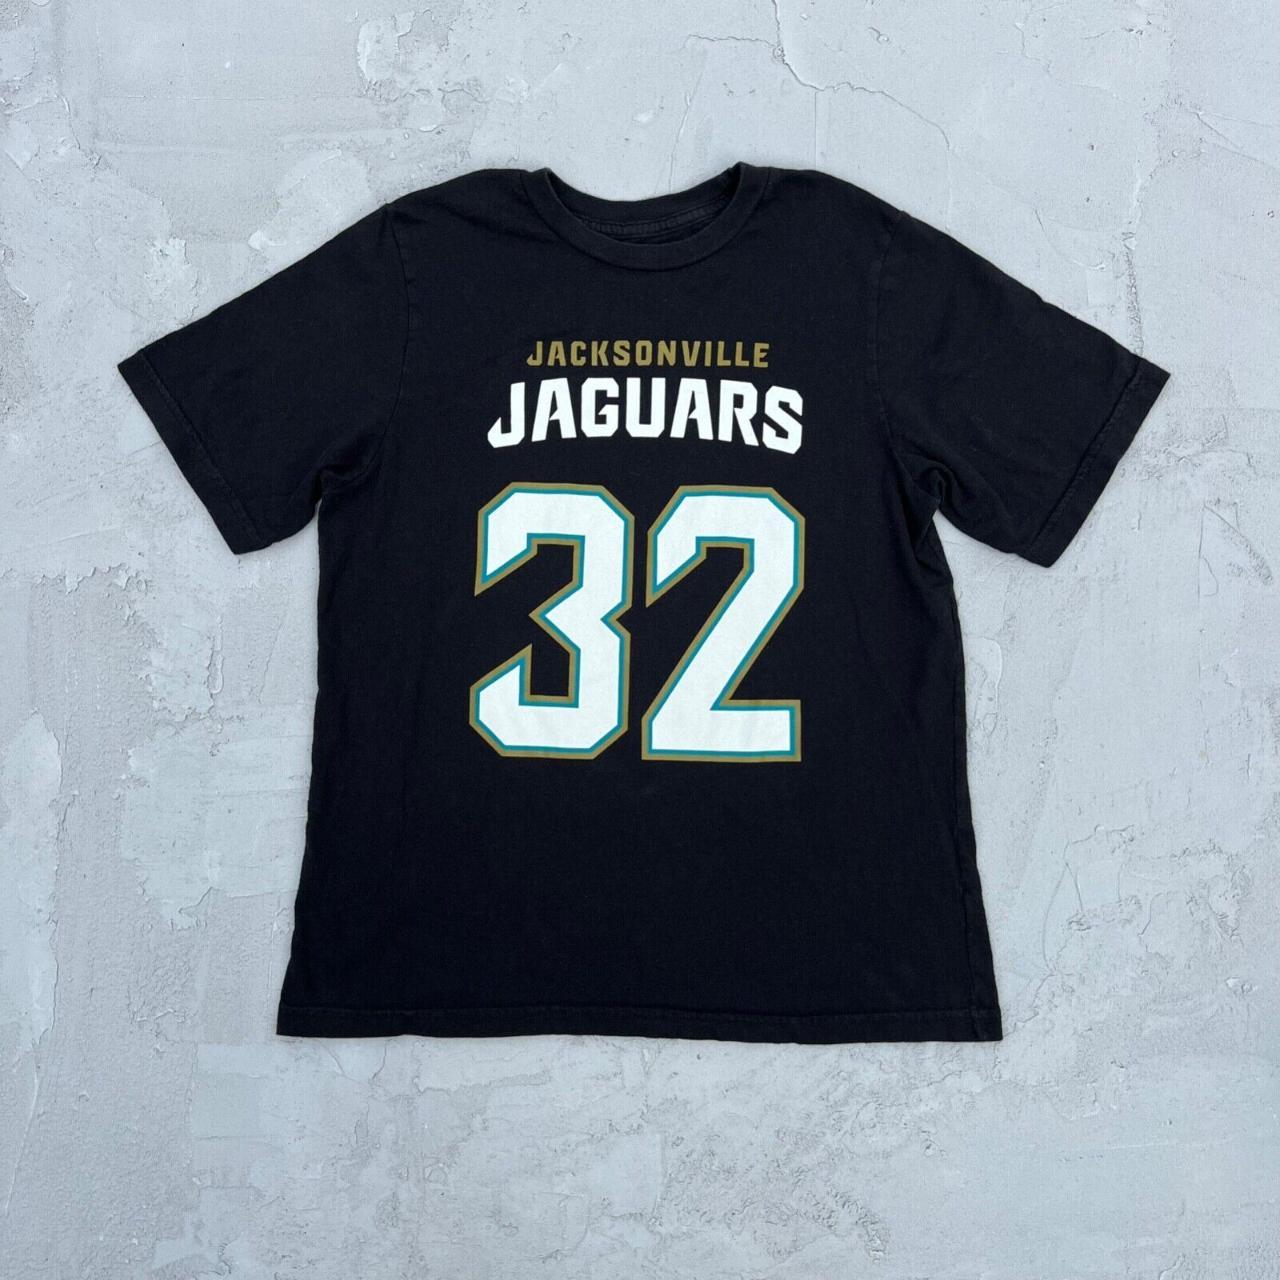 Jacksonville Jaguars Womens S/S Button Up Baseball Shirt - Black, L